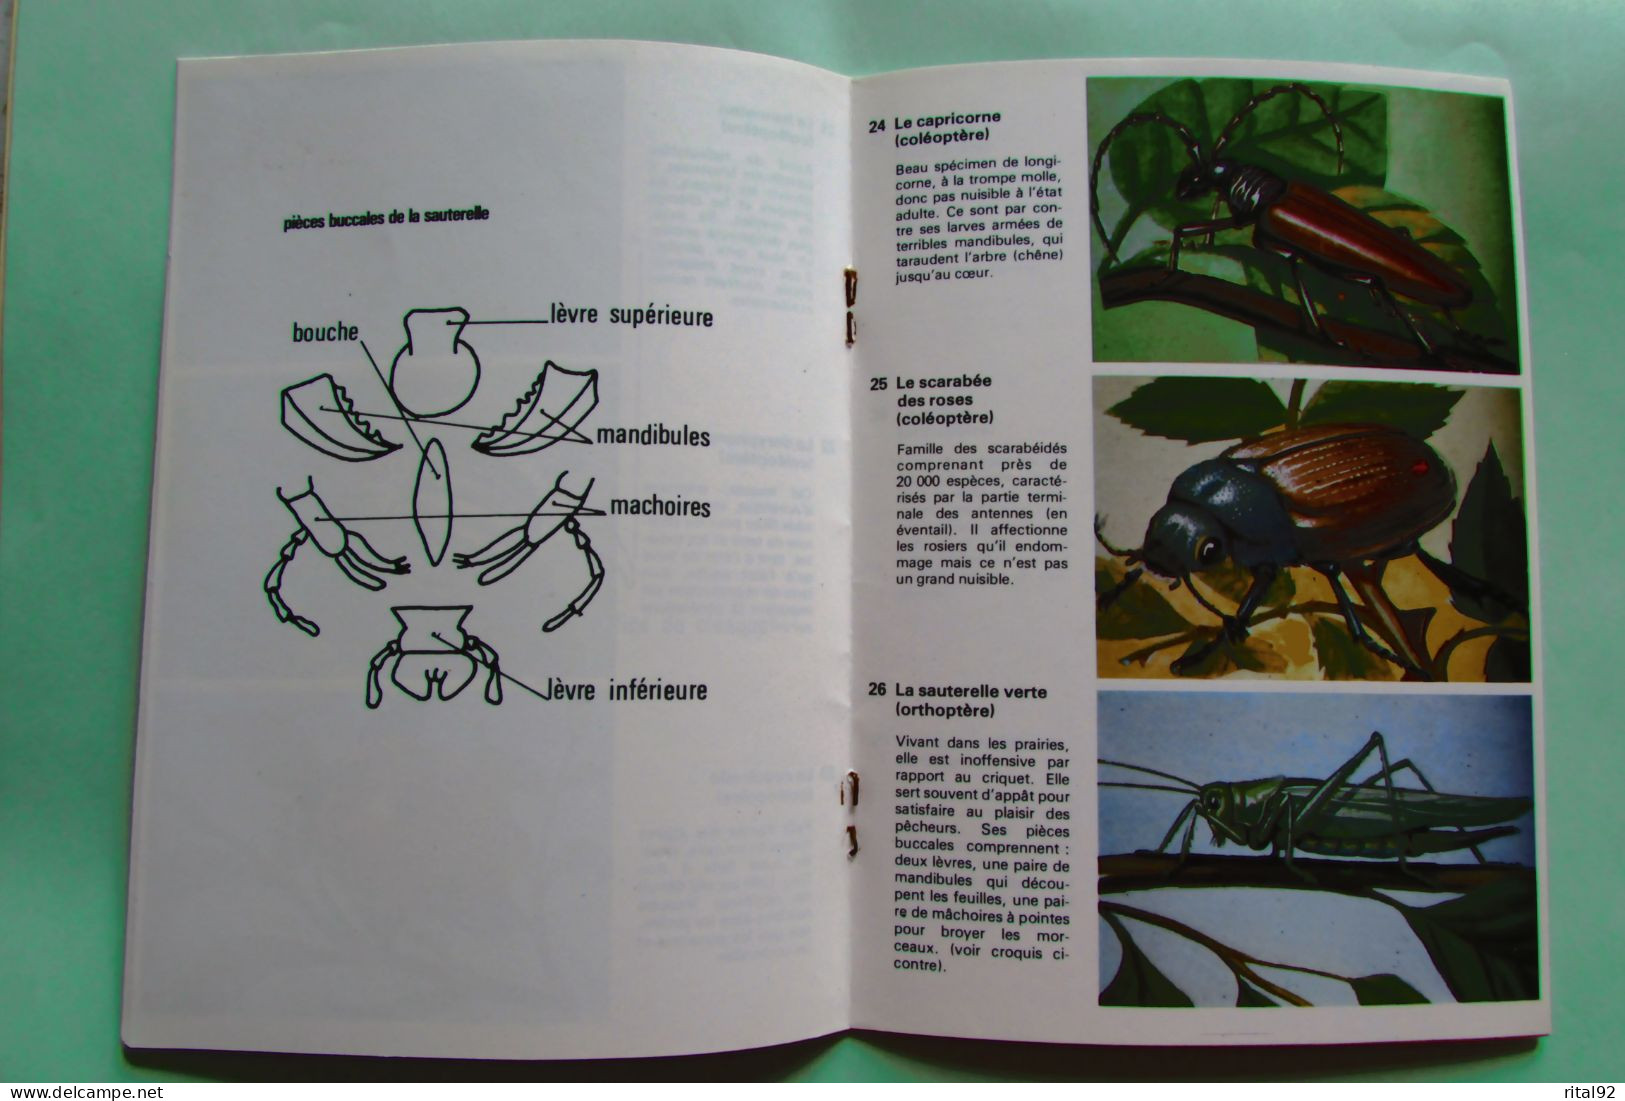 VOLUMETRIX - Livret Educatif Images à Découper - Edition 1979 - Didactische Kaarten